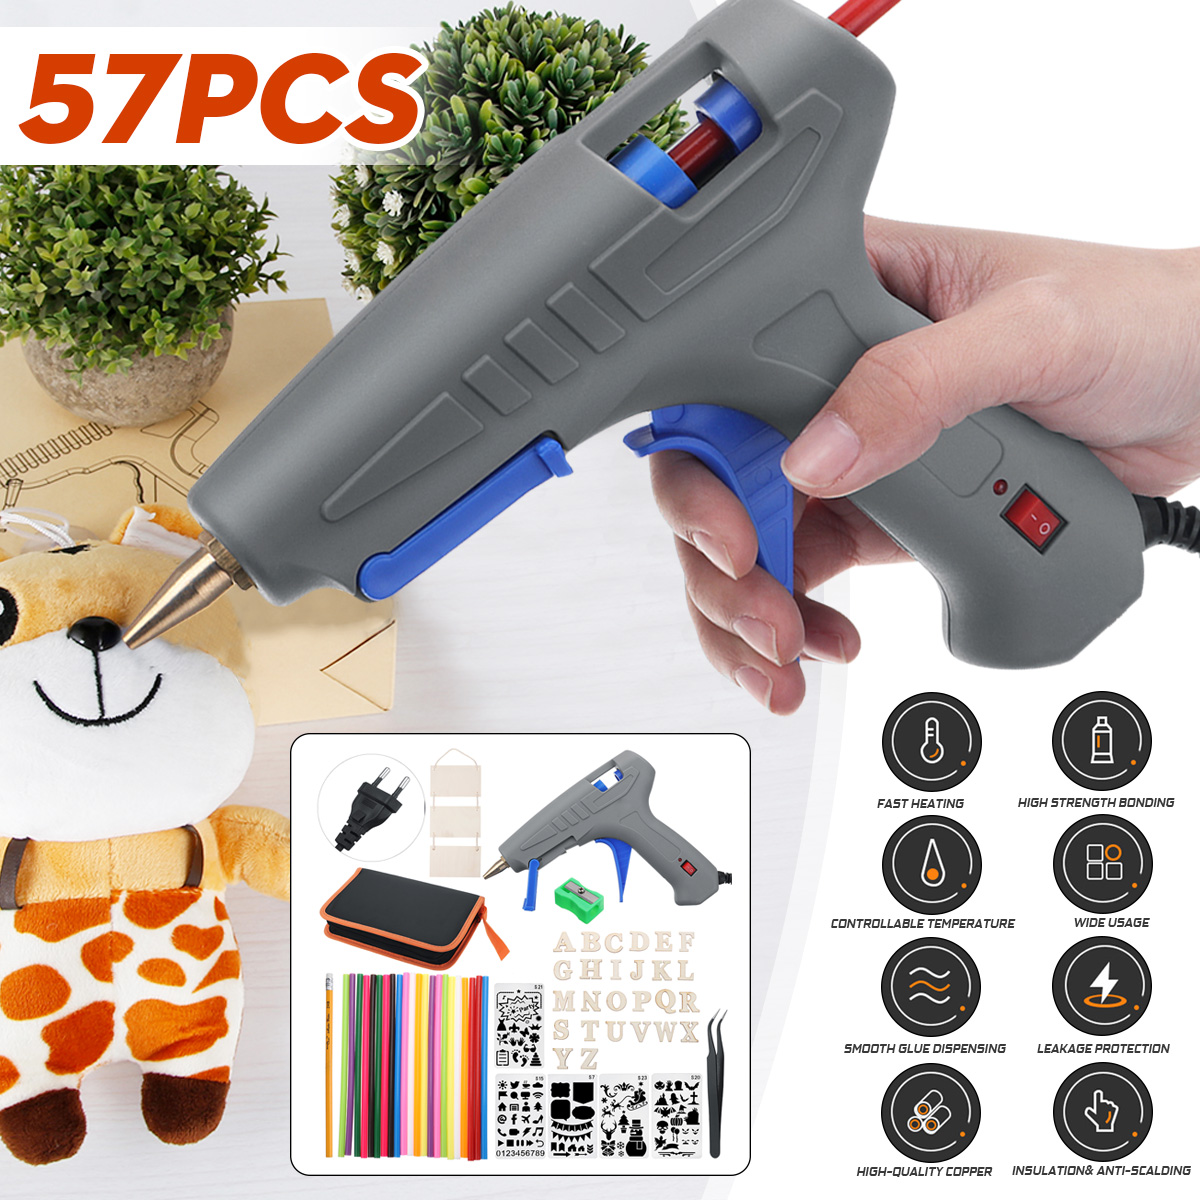 57Pcs-30W-Cordless-Electric-Hot-Glue-Guns-DIY-Art-Craft-Glue-Guns-with-Adhesive-Melt-Glue-Sticks-1659813-1